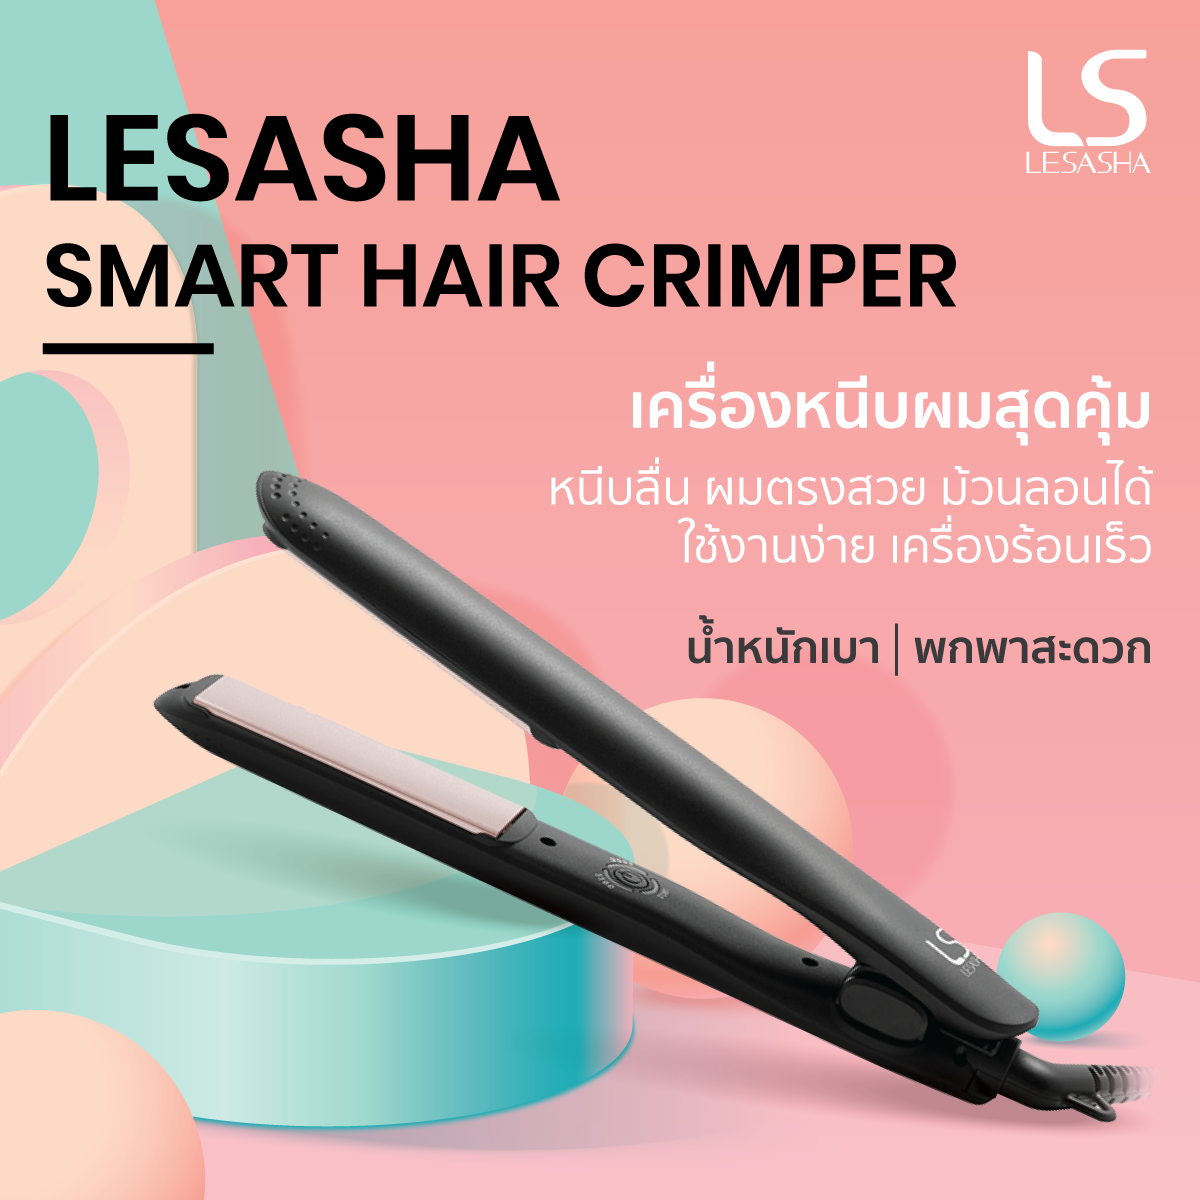 LESASHA เครื่องหนีบผม รุ่น Smart Hair Crimper (LS1524)